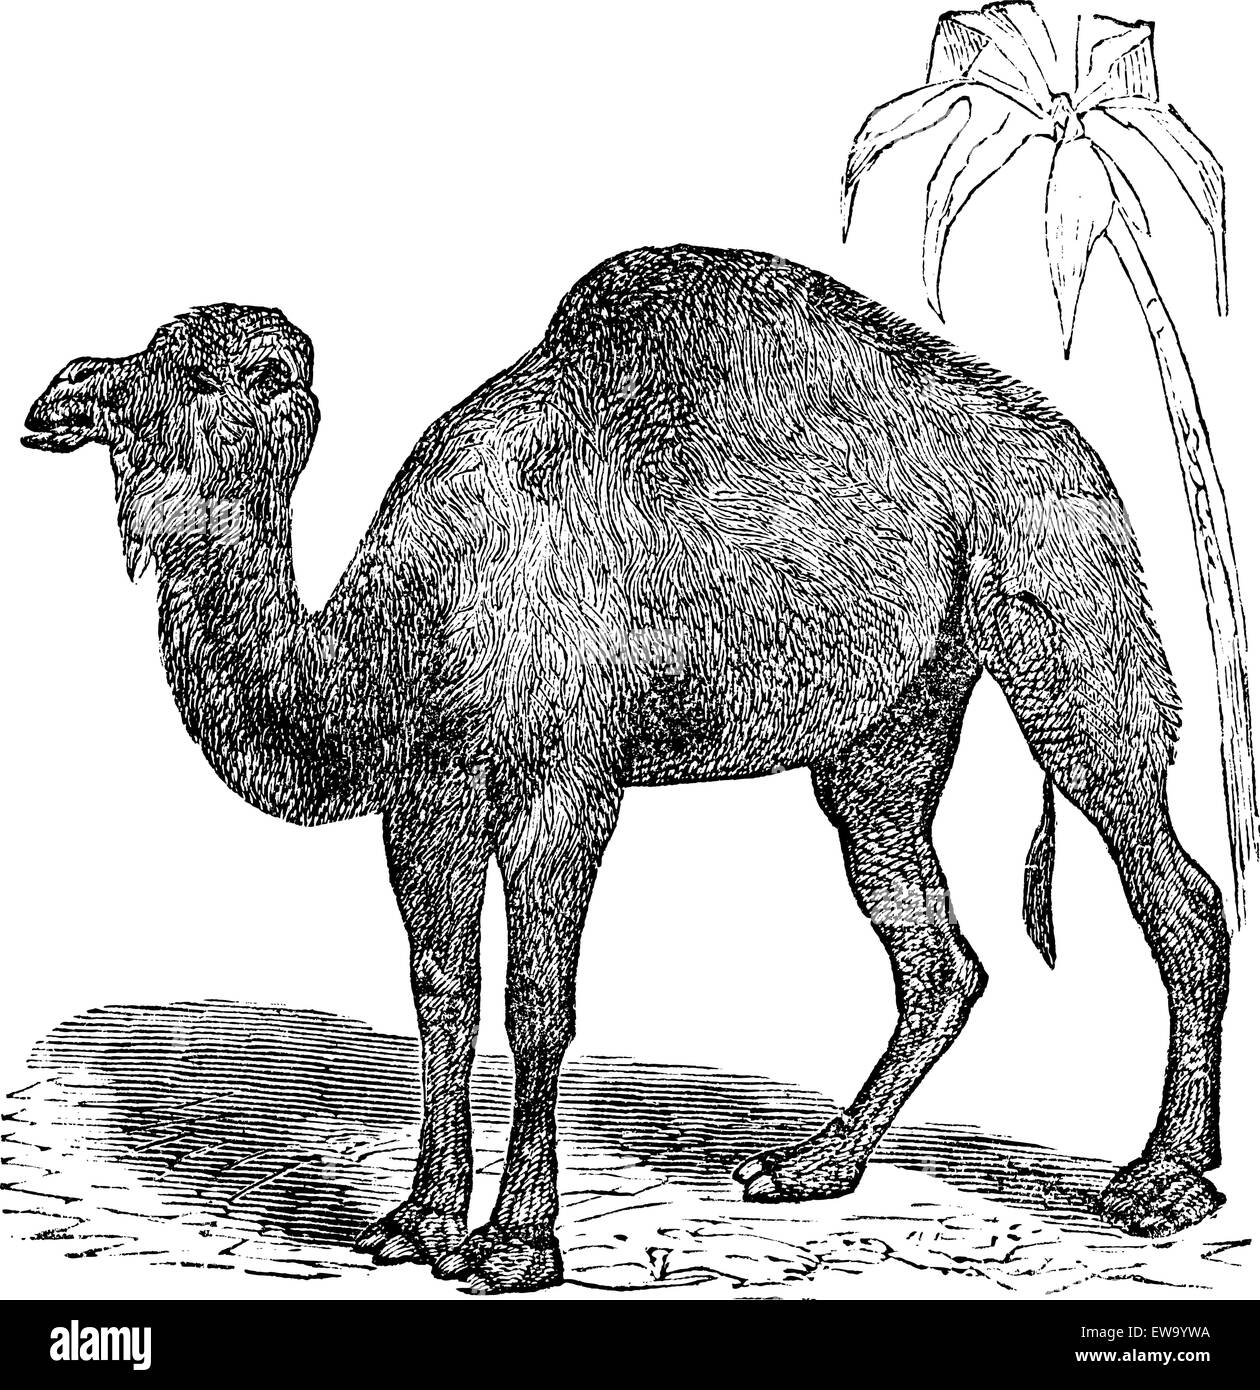 Dromedary, Arabian camel or  Camelus dromedarius vintage engraving. Old engraved illustration of dromedary near palm tree on desert. Stock Vector